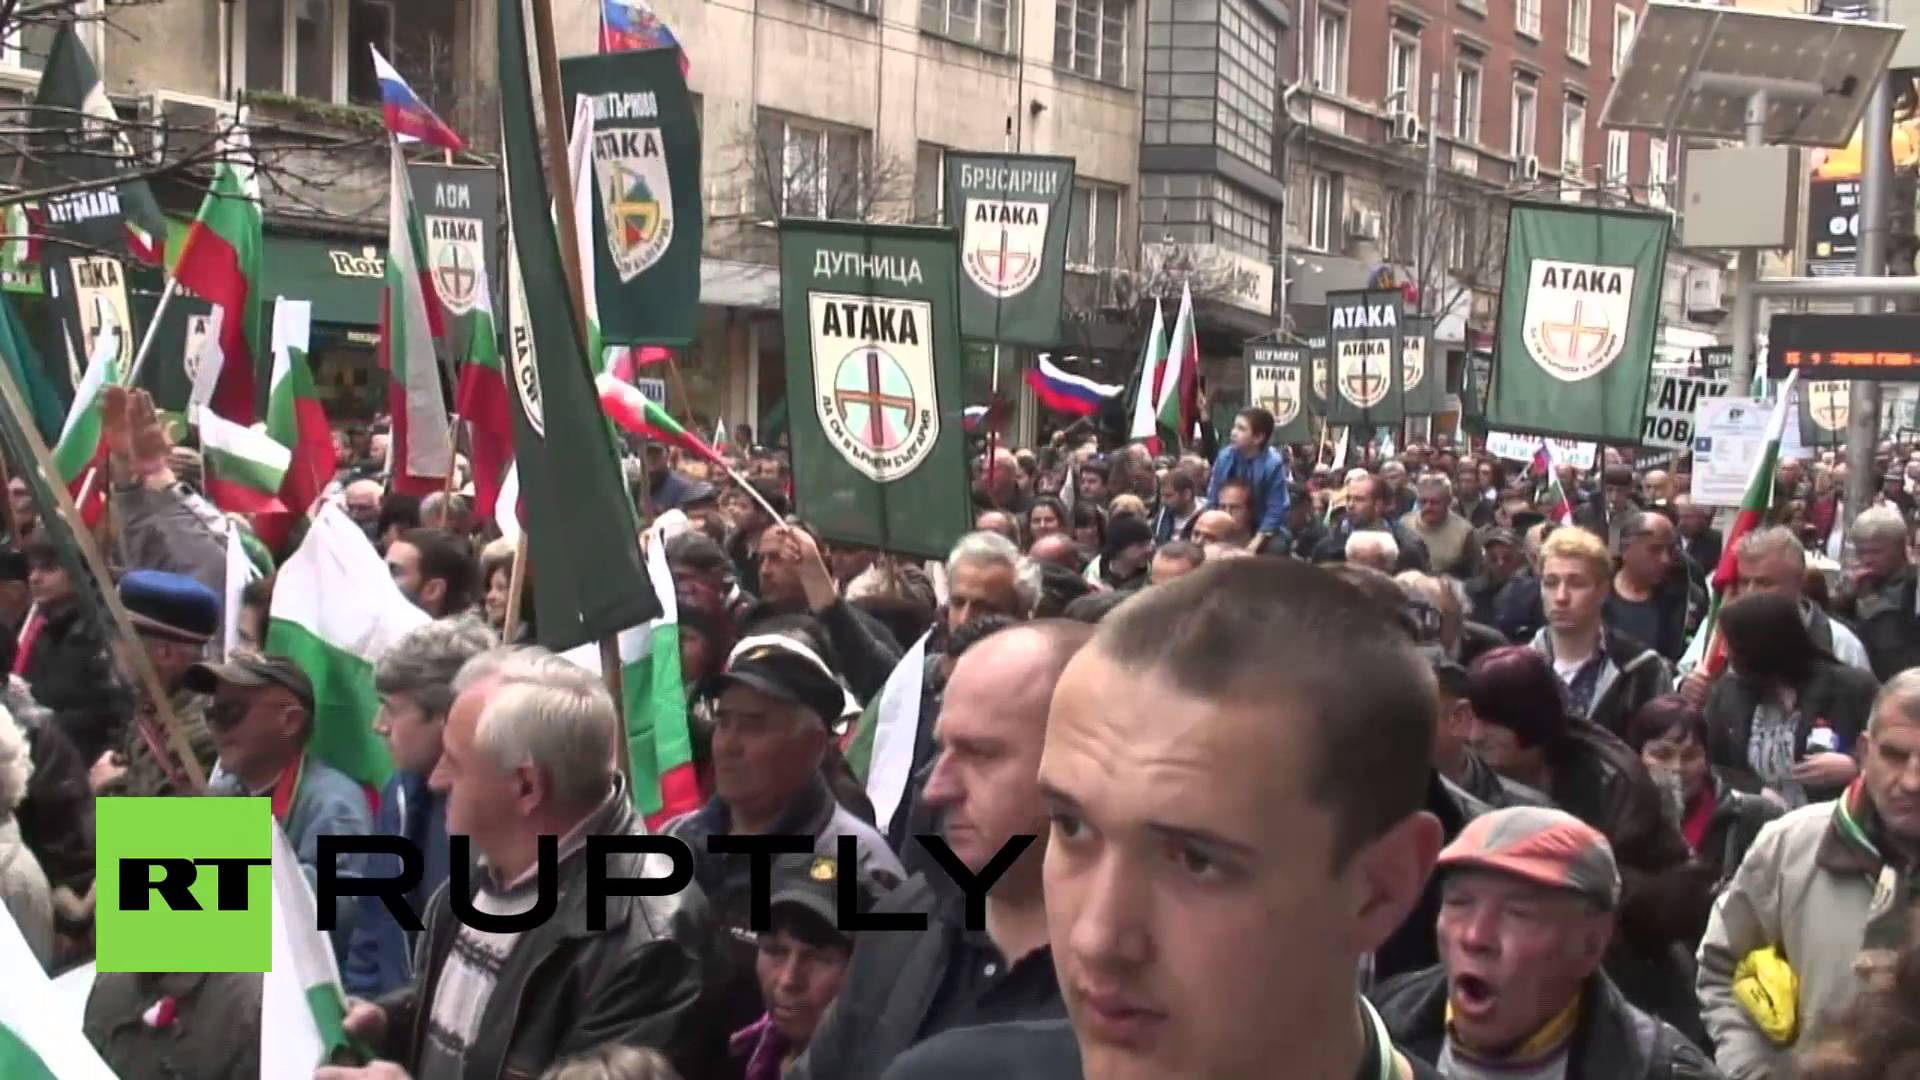 Bulgaria: Russia’s Nikolai Valuev joins Ataka supporters for Liberation Day in Sofia